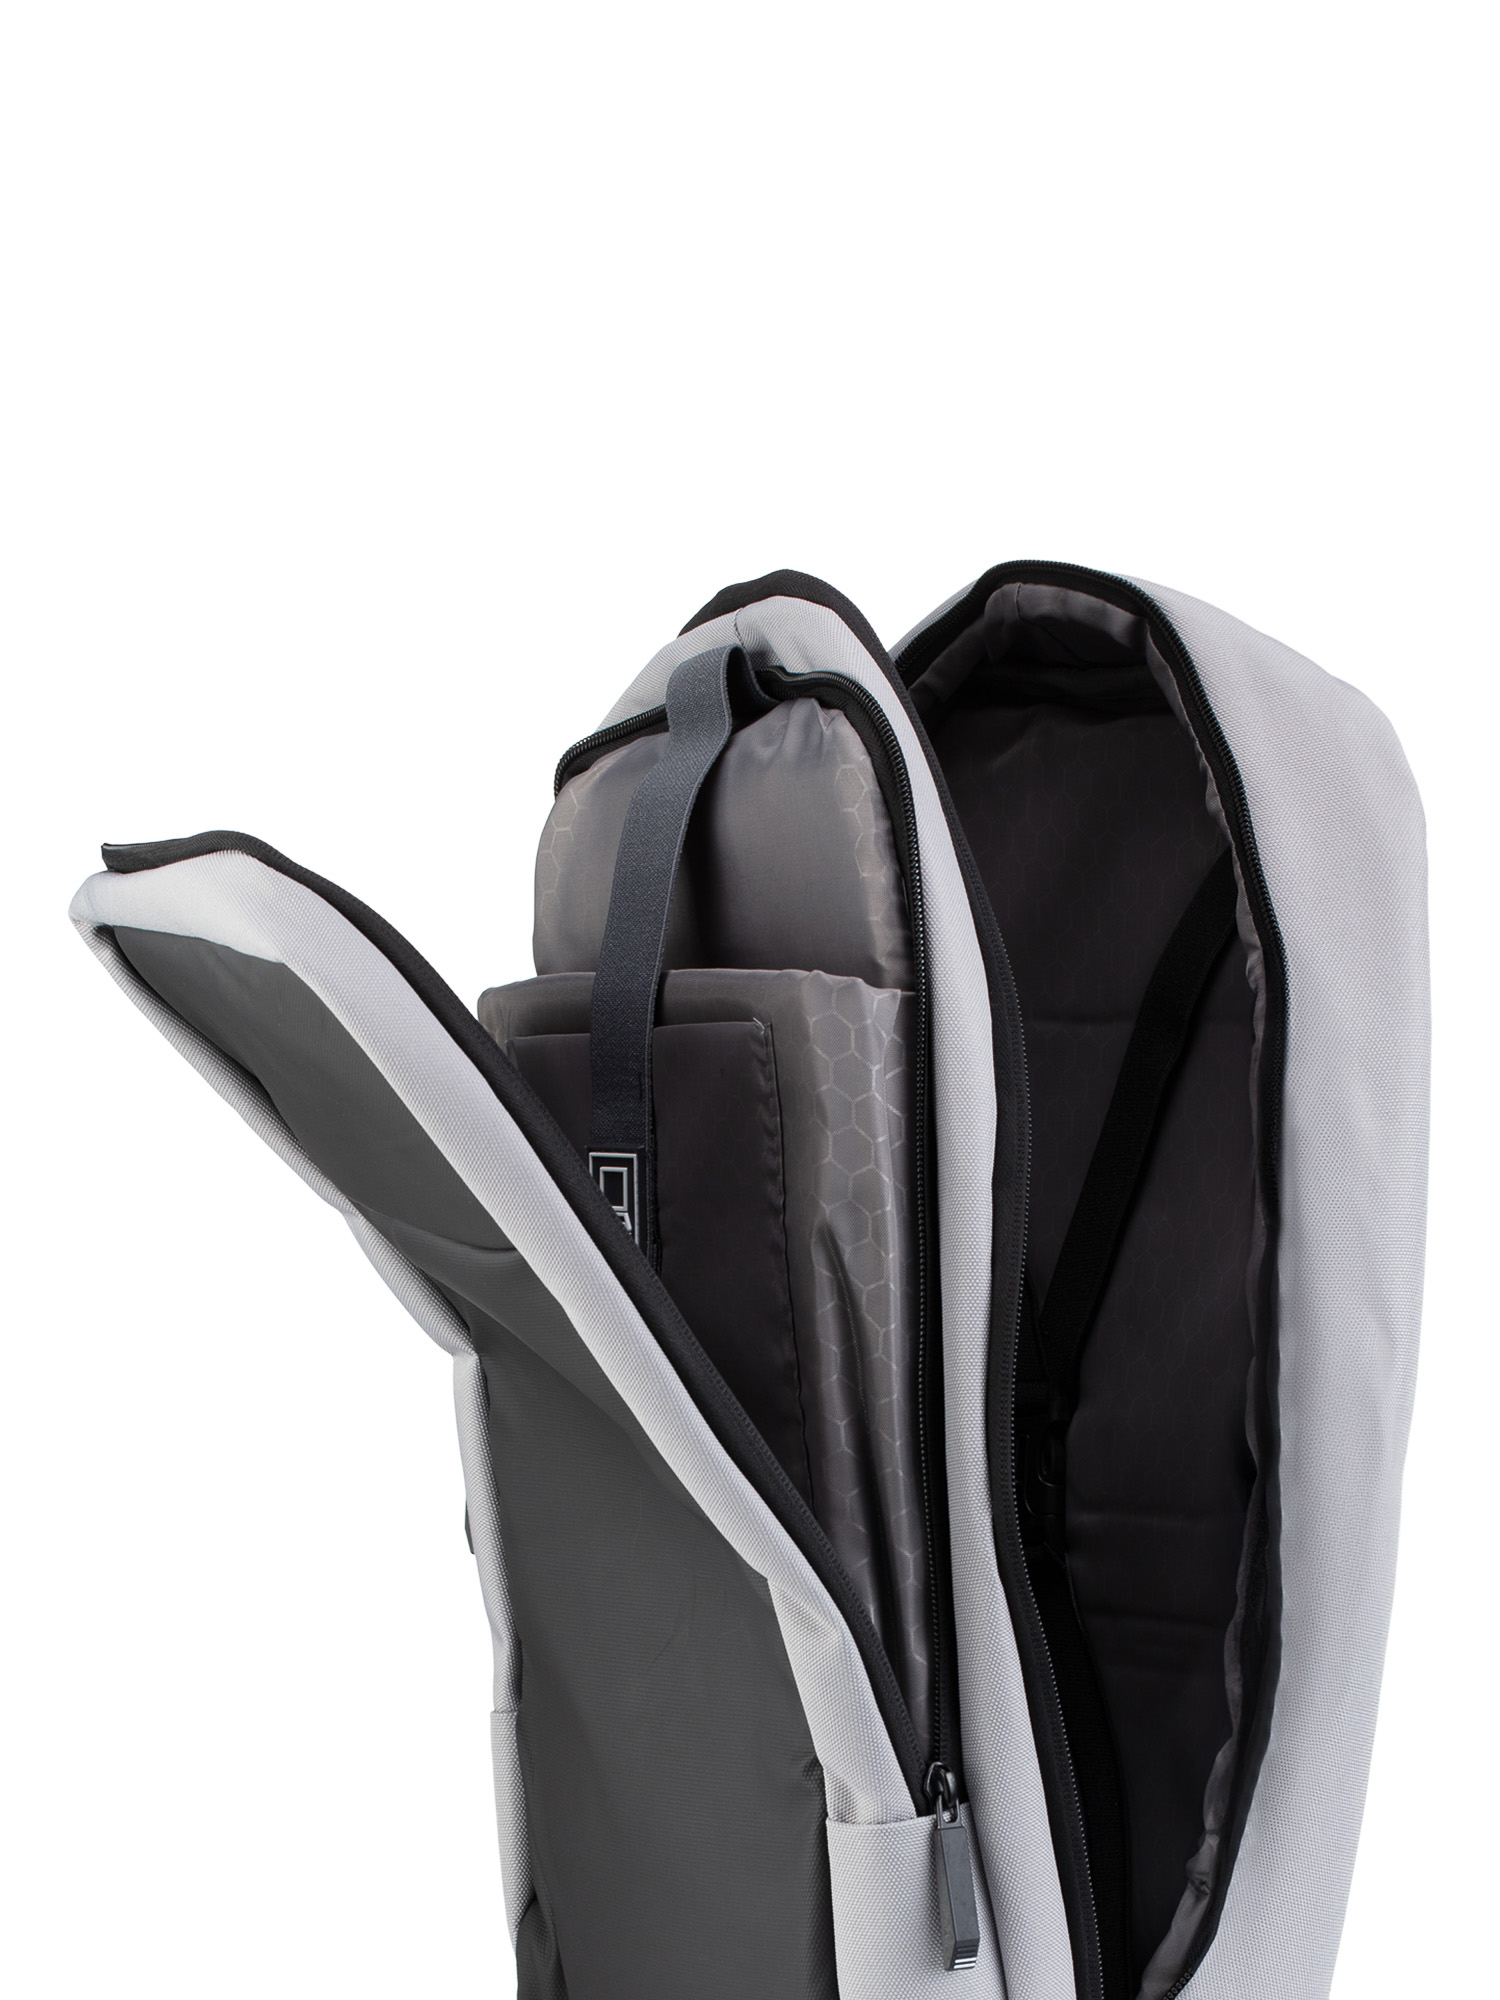 Backpack Ανδρικό Υφασμάτινο Δίχρωμο - Γκρι